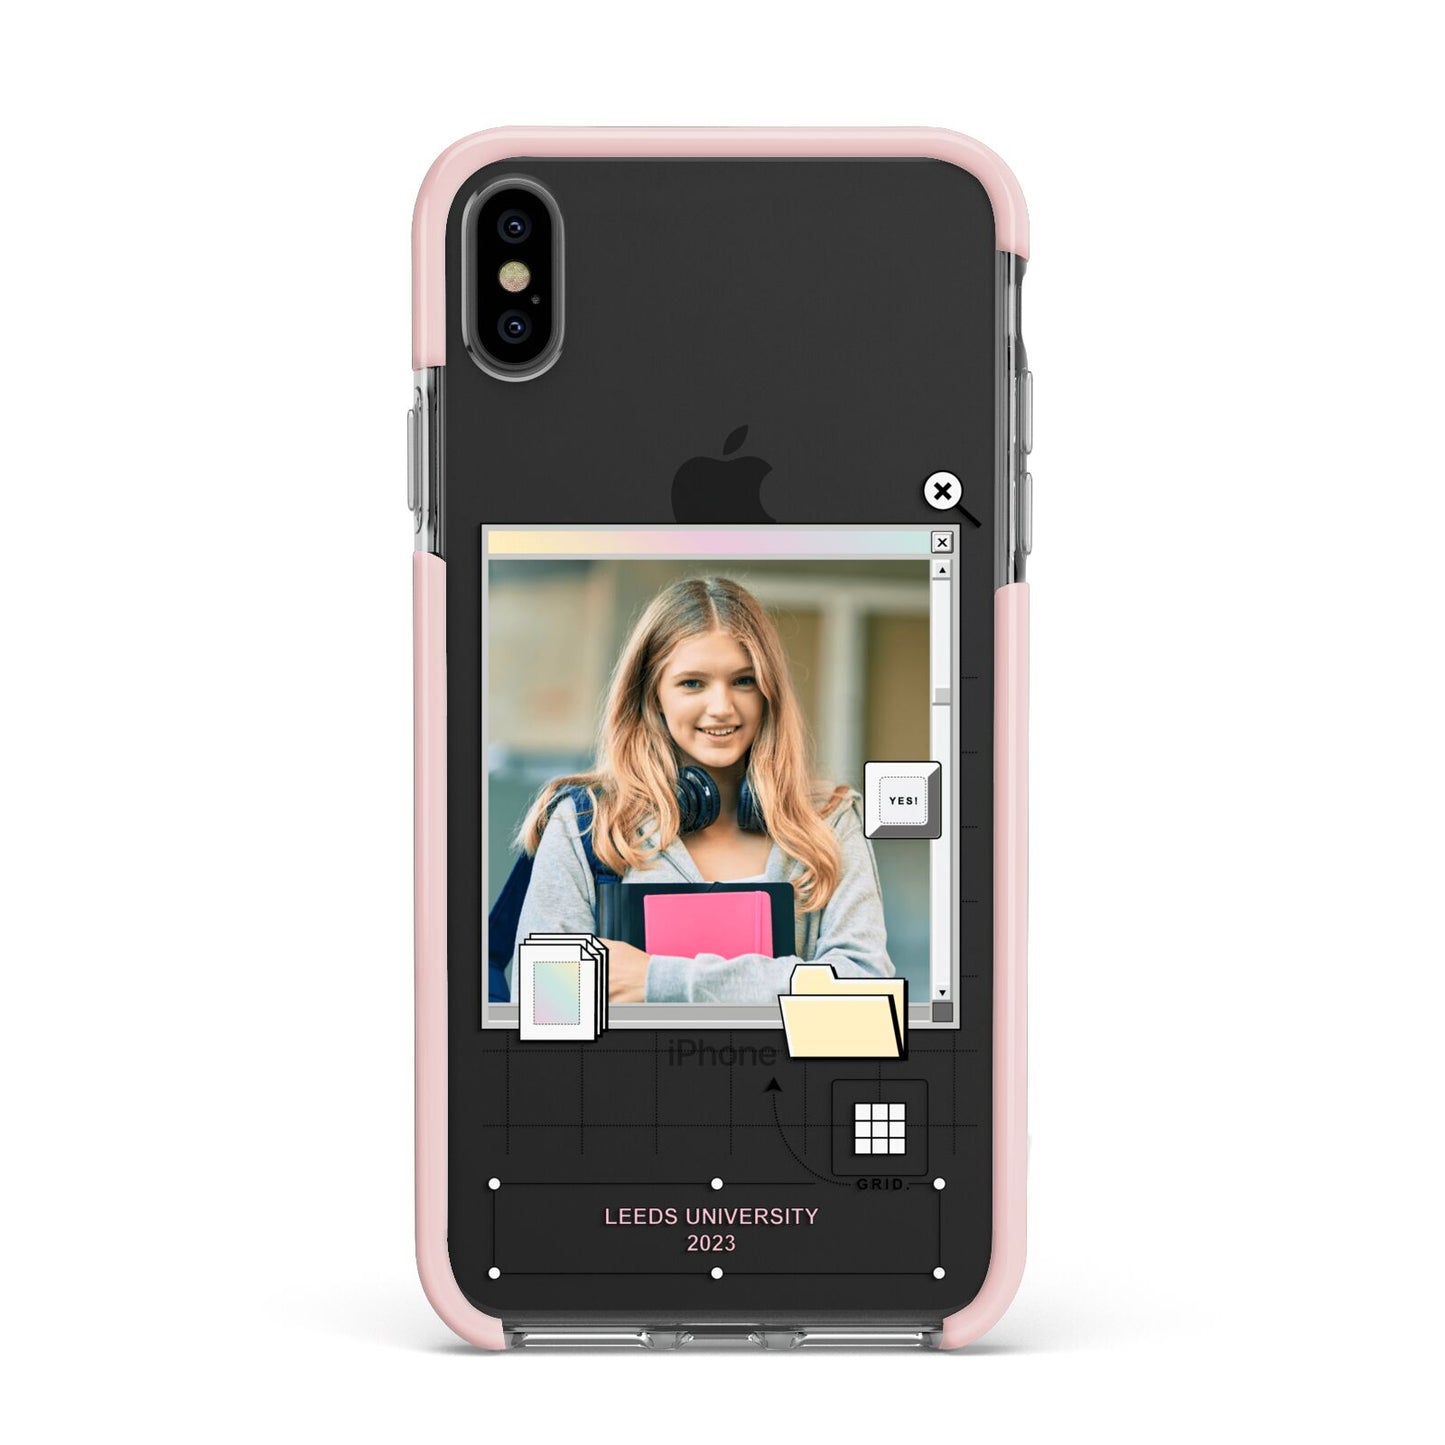 Retro Computer Photo Apple iPhone Xs Max Impact Case Pink Edge on Black Phone